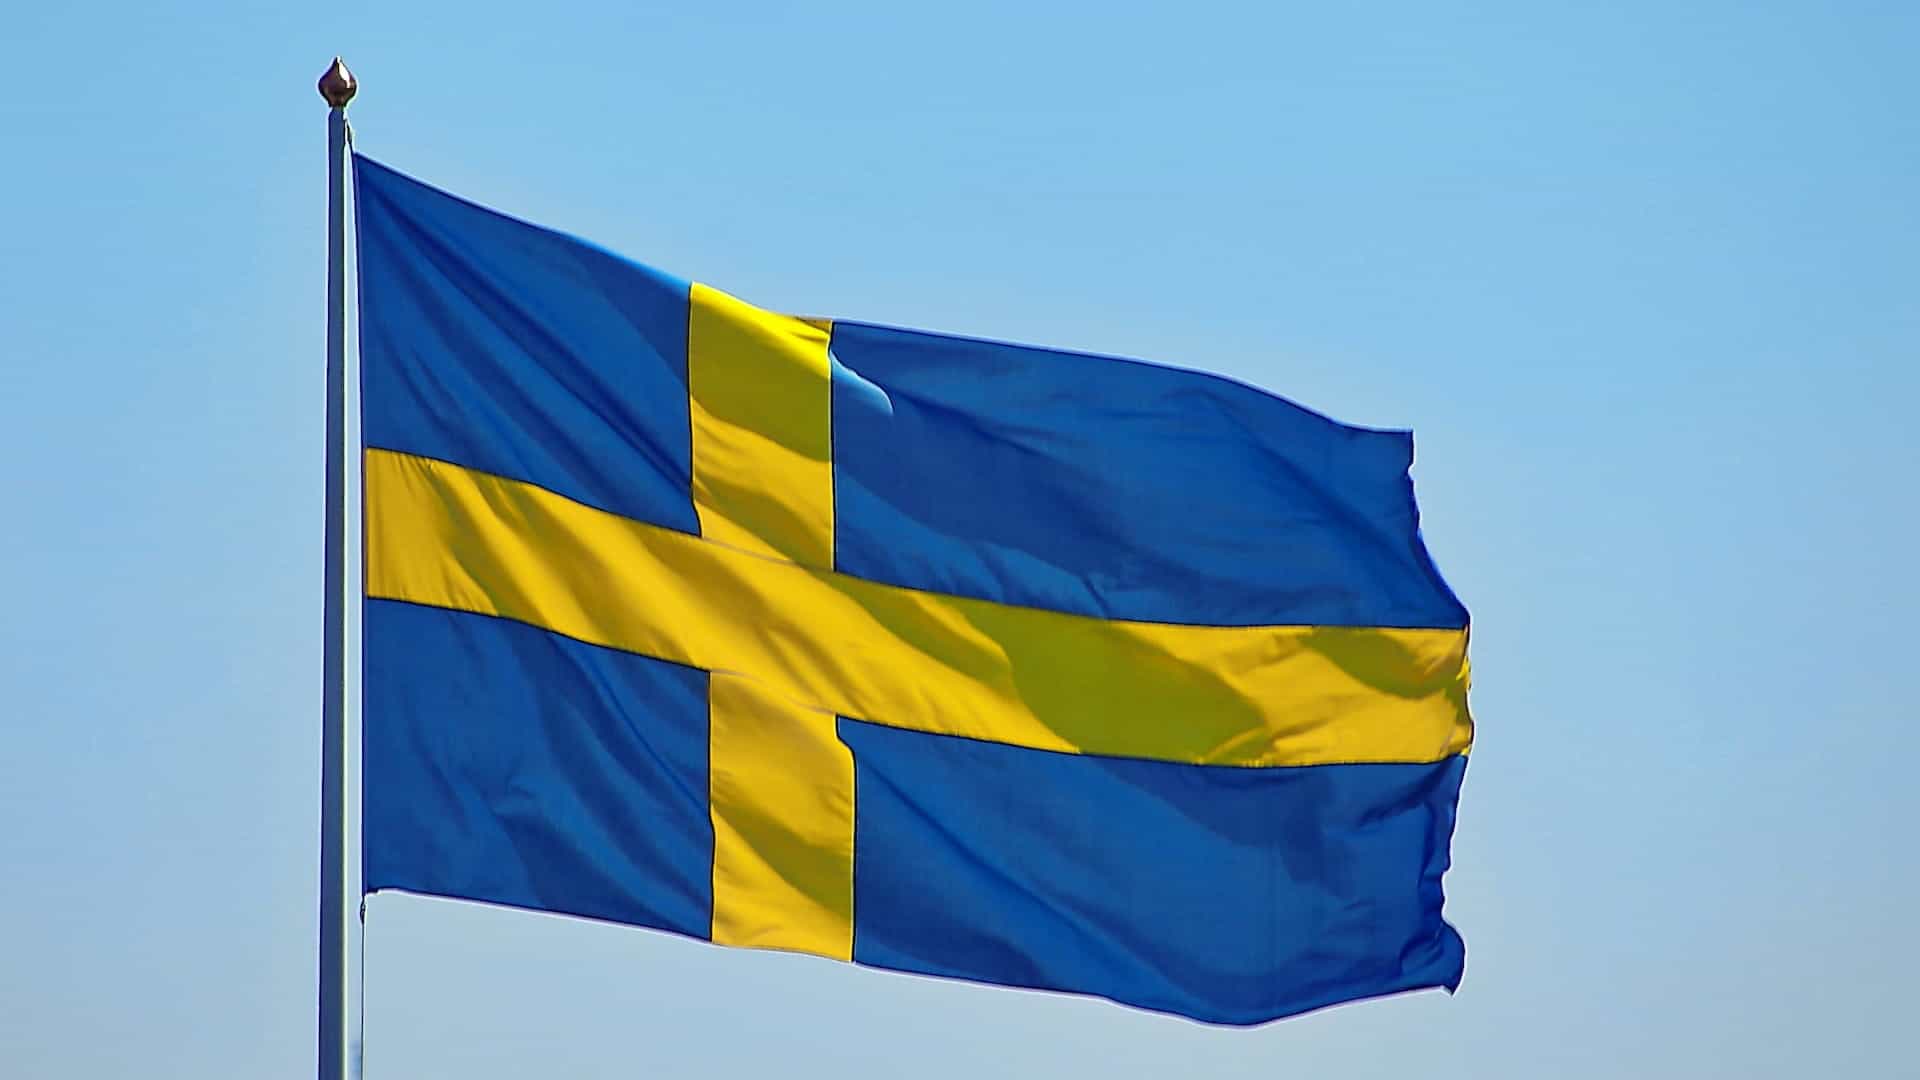 Bendera Swedia berkibar di langit biru.